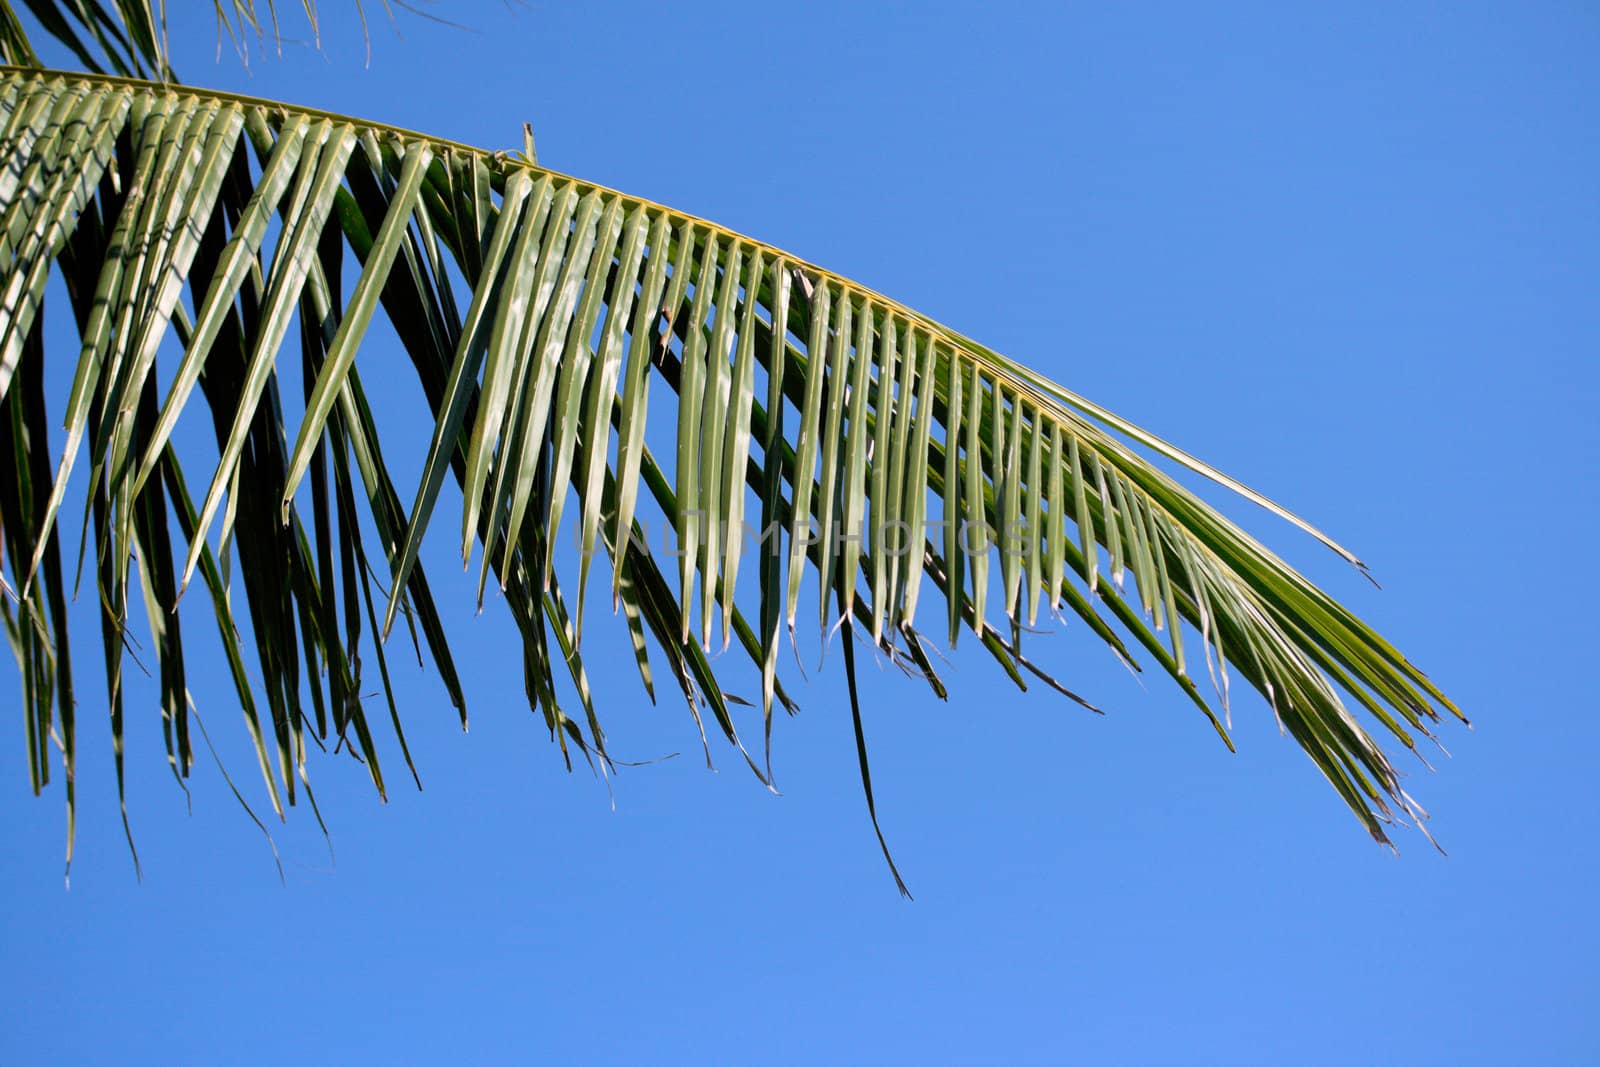 Palm tree leaves by dimol